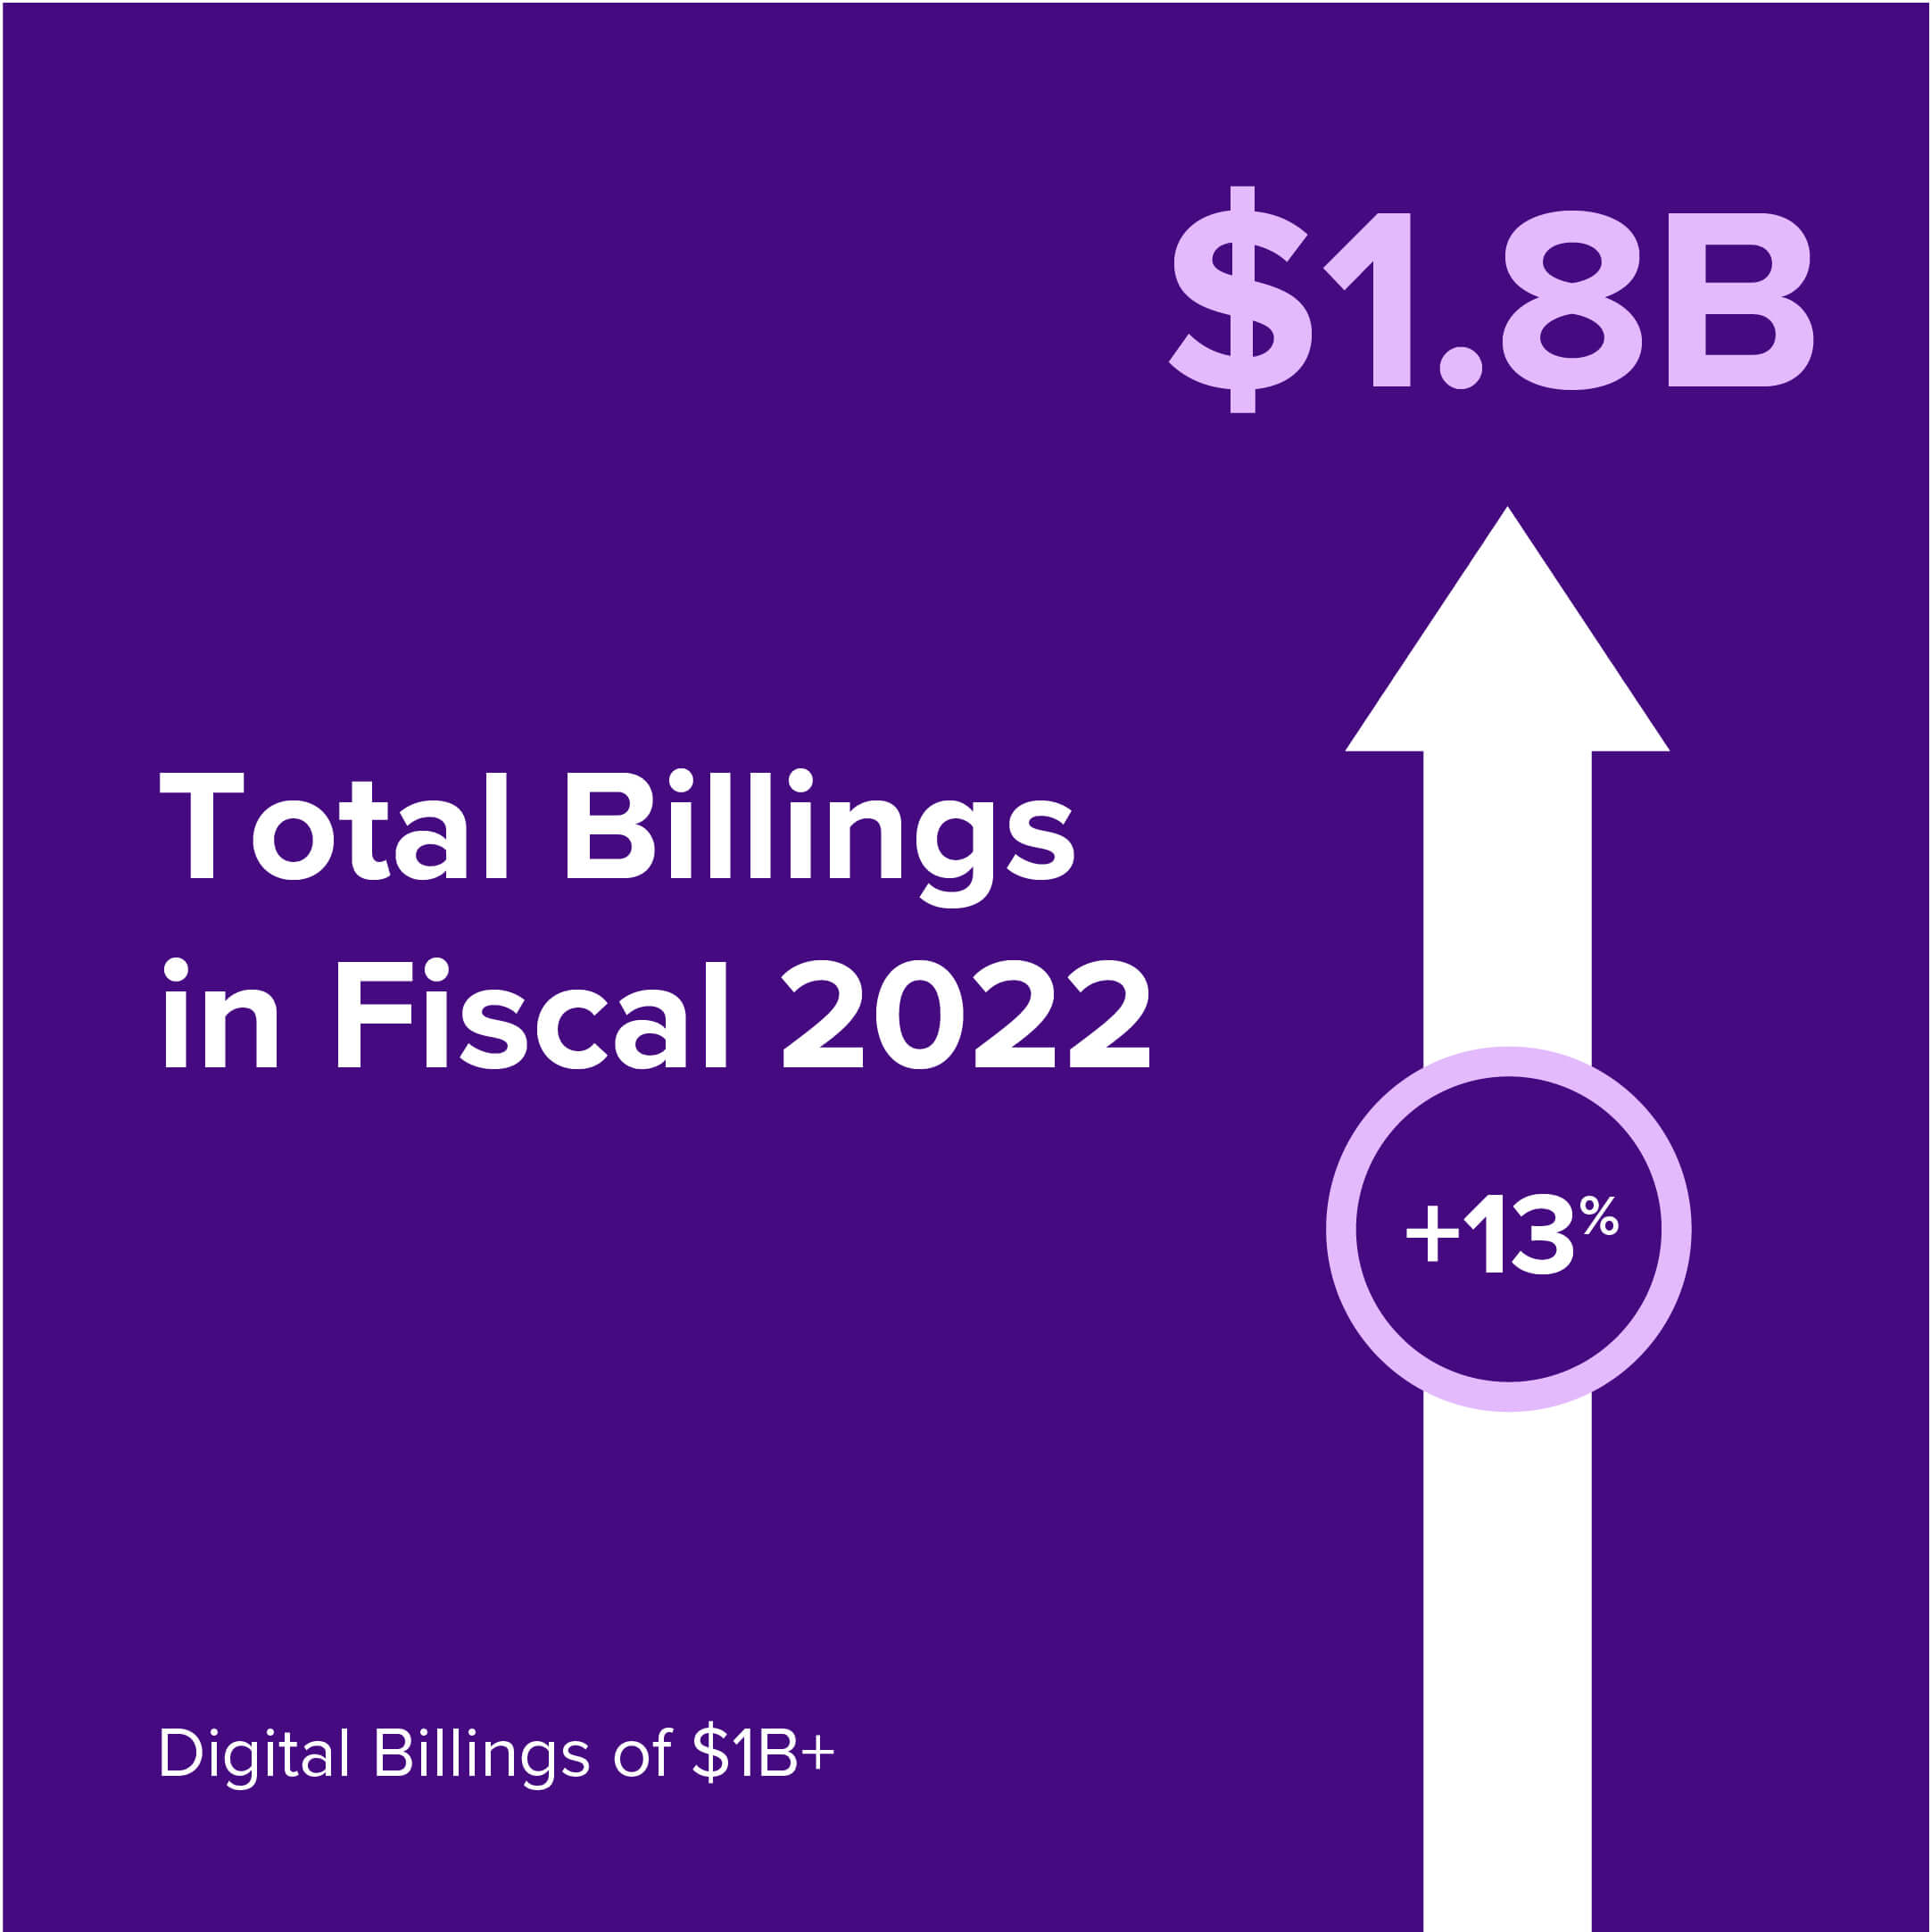 Total Billings in fiscal 2022